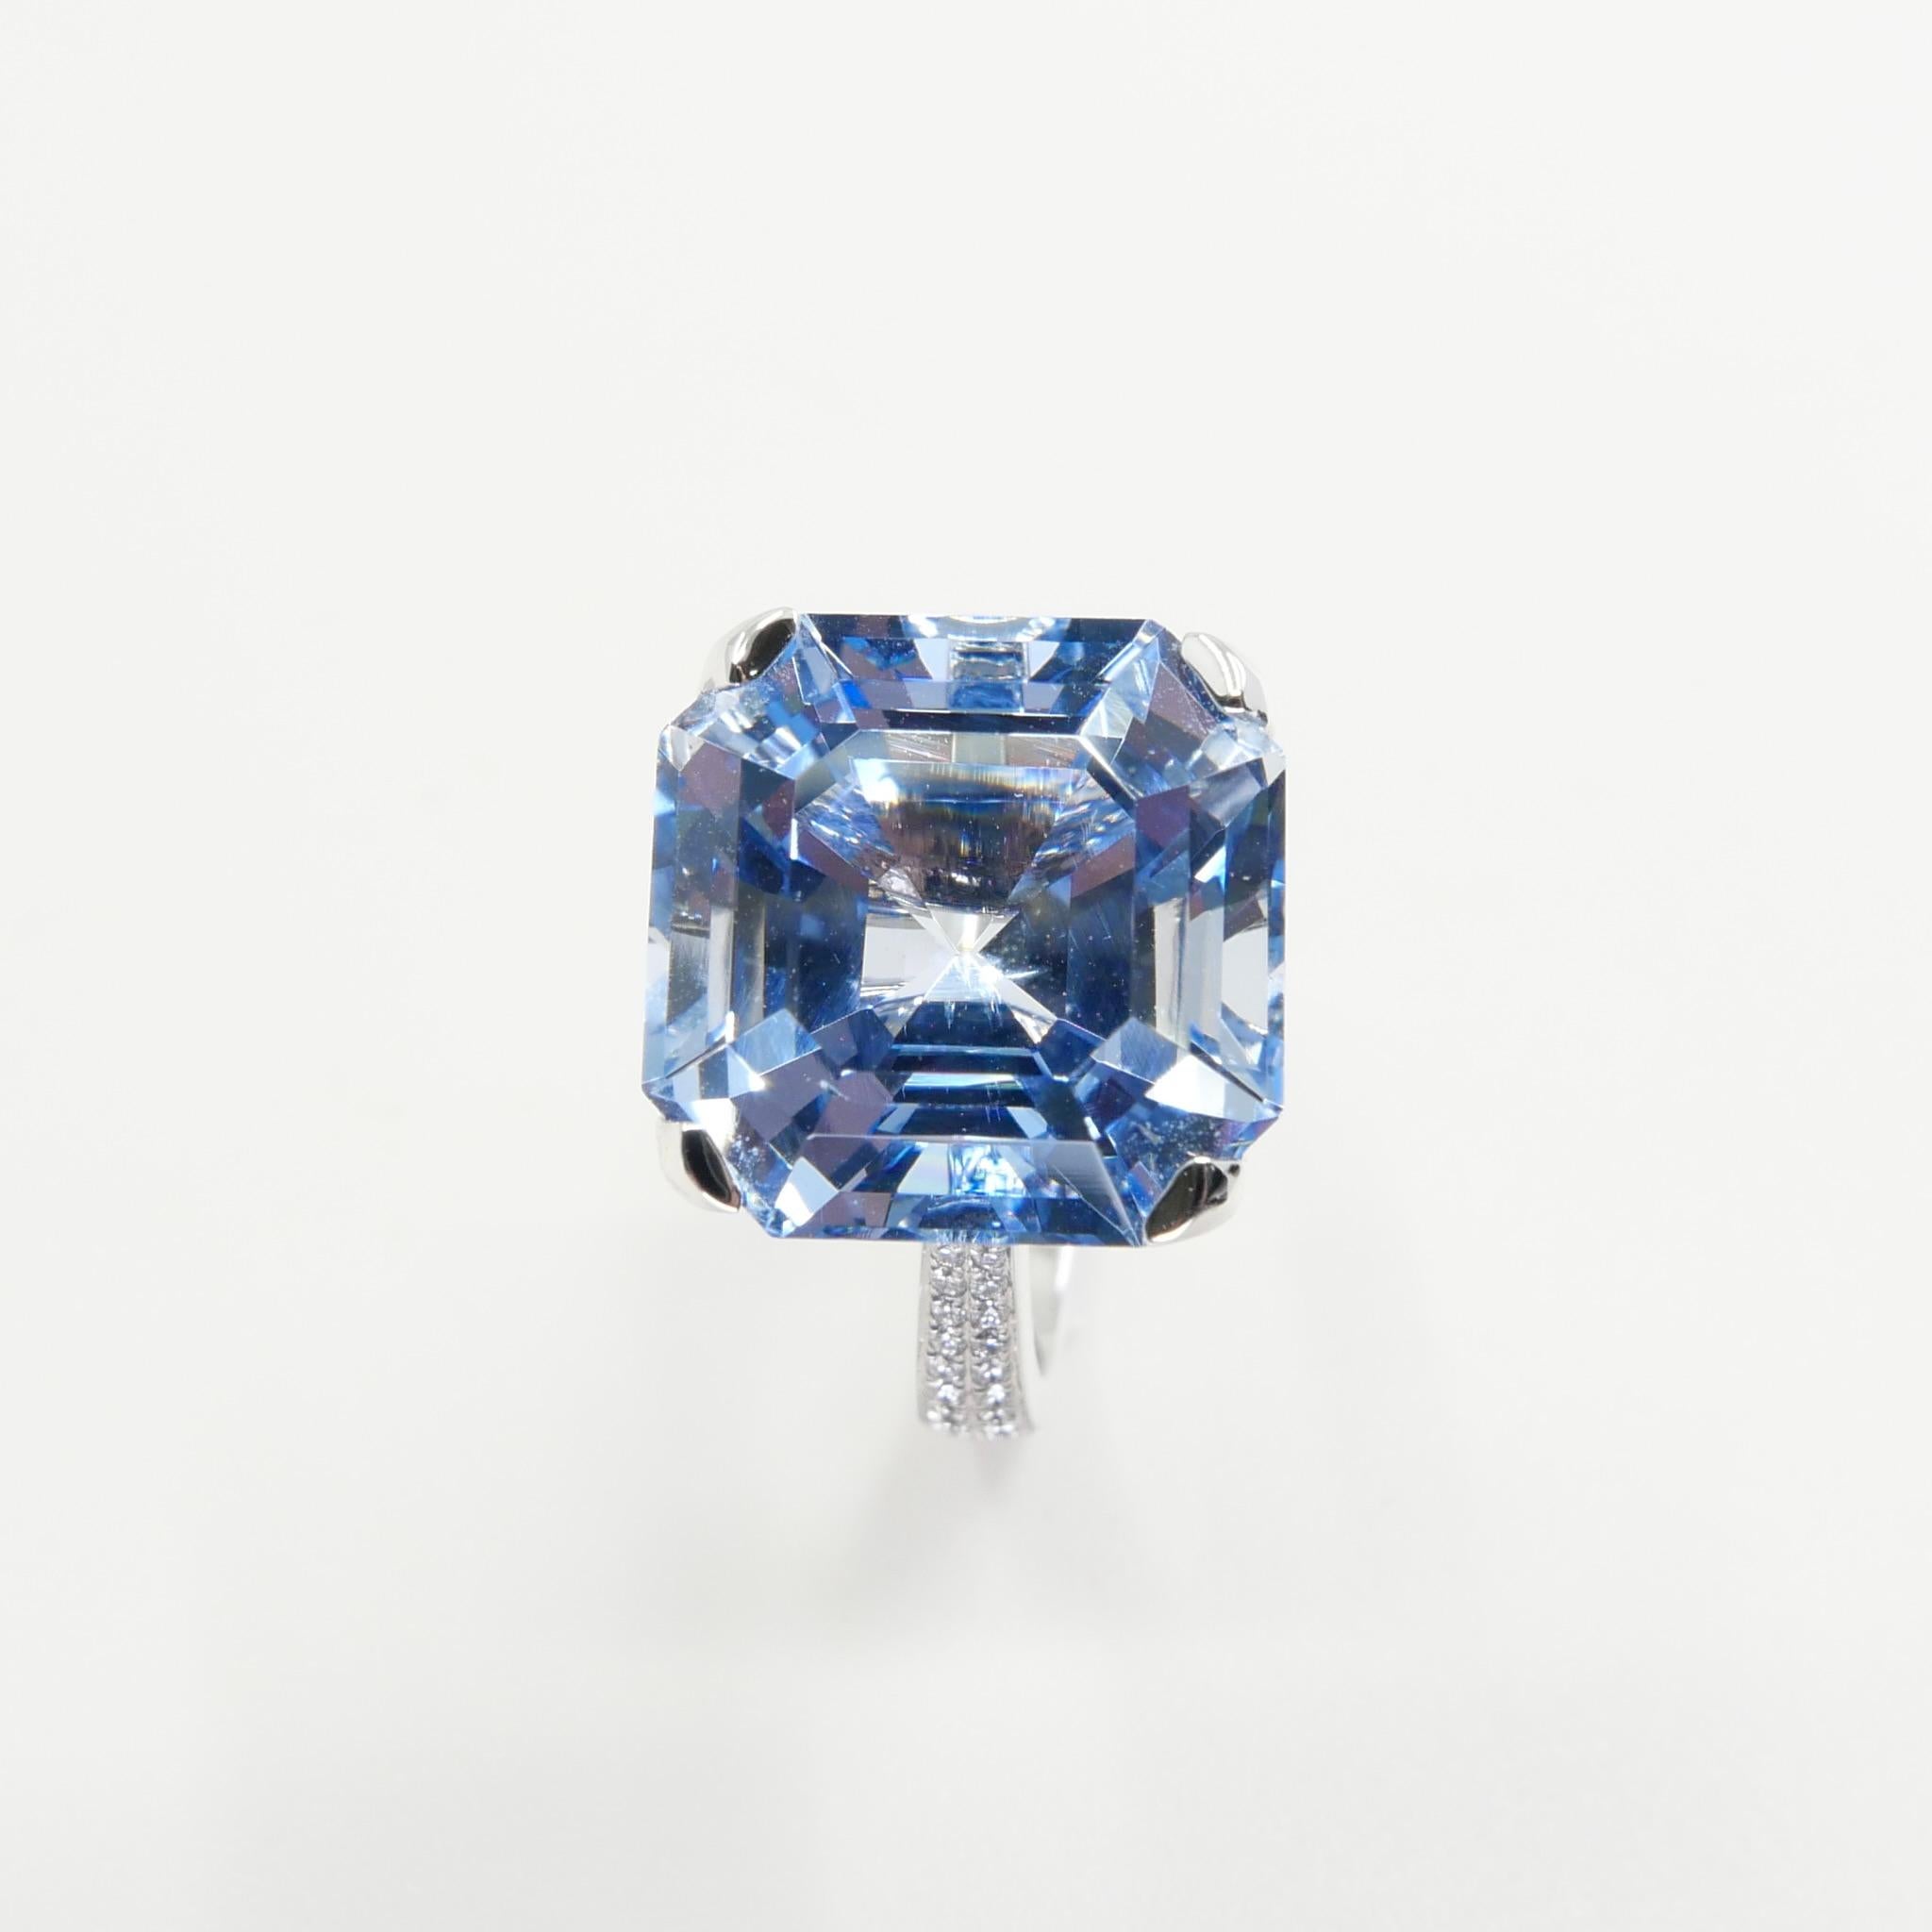 Certified 11.23 Cts Asscher Cut Aquamarine Diamond Ring, True Santa Maria Color 4